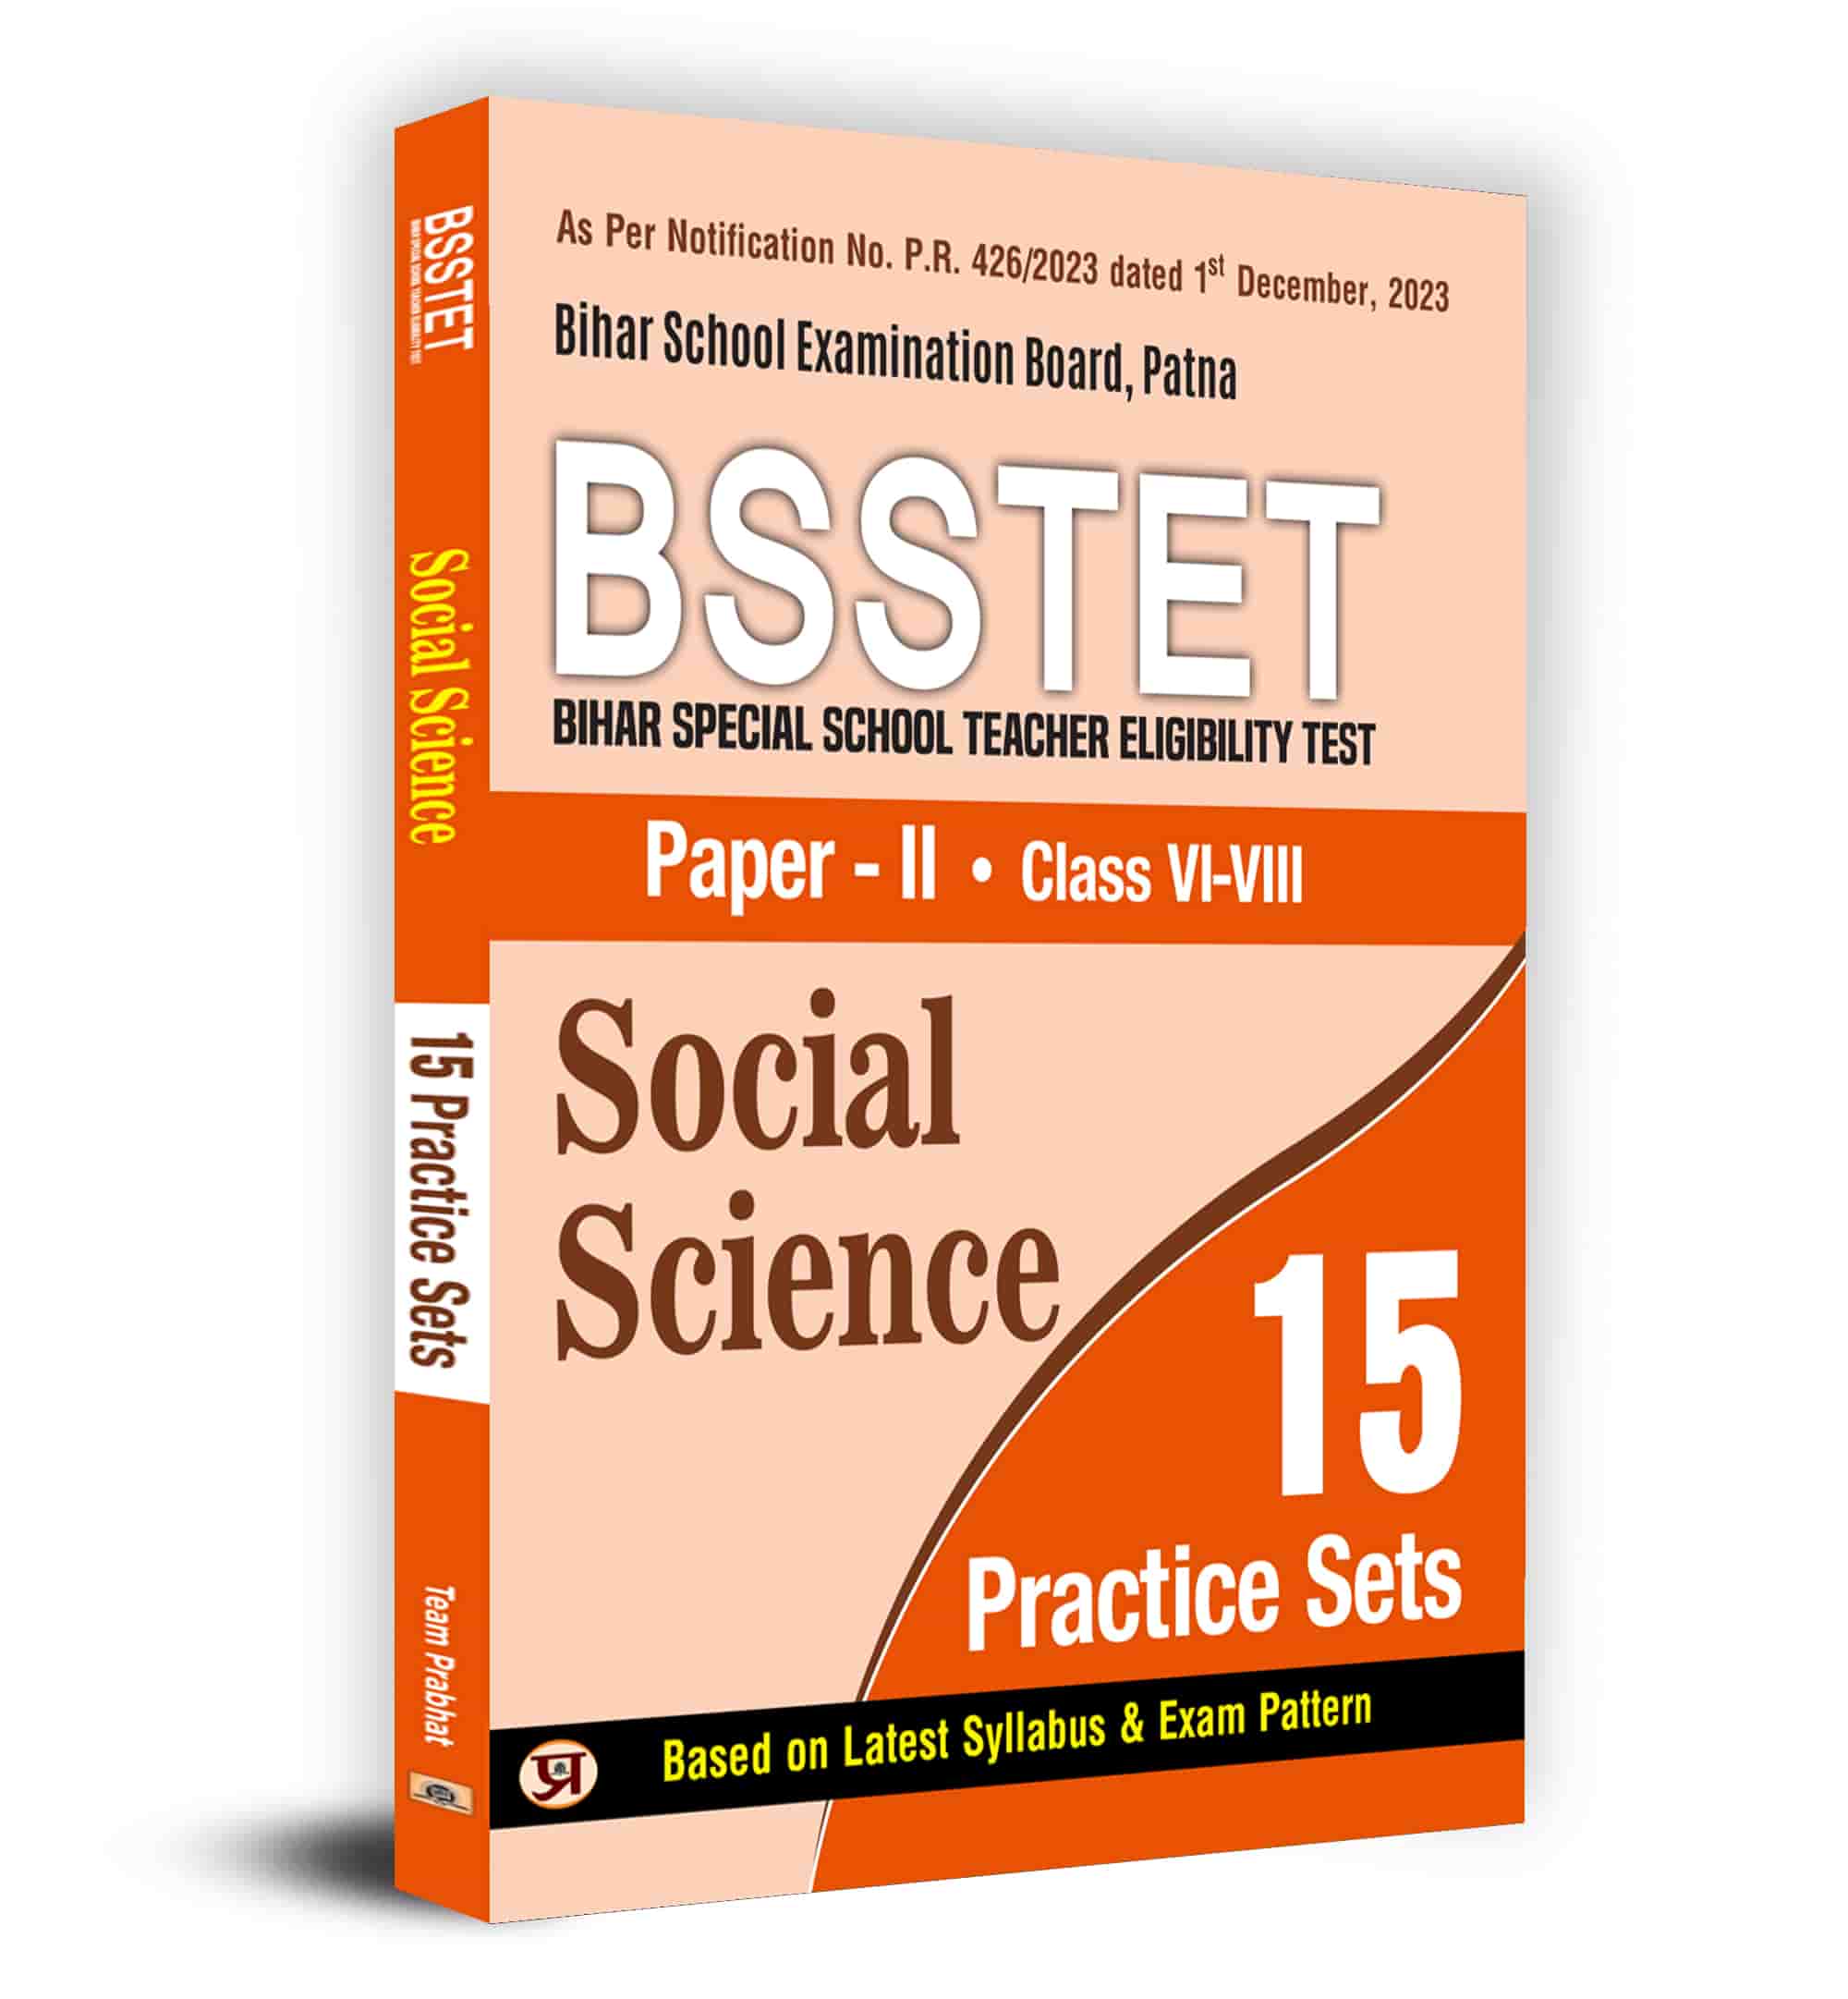 BSSTET Bihar Special School Teacher Eligibility Test Paper-2 Class 6-8 | Social Science 15 Practice Sets Book